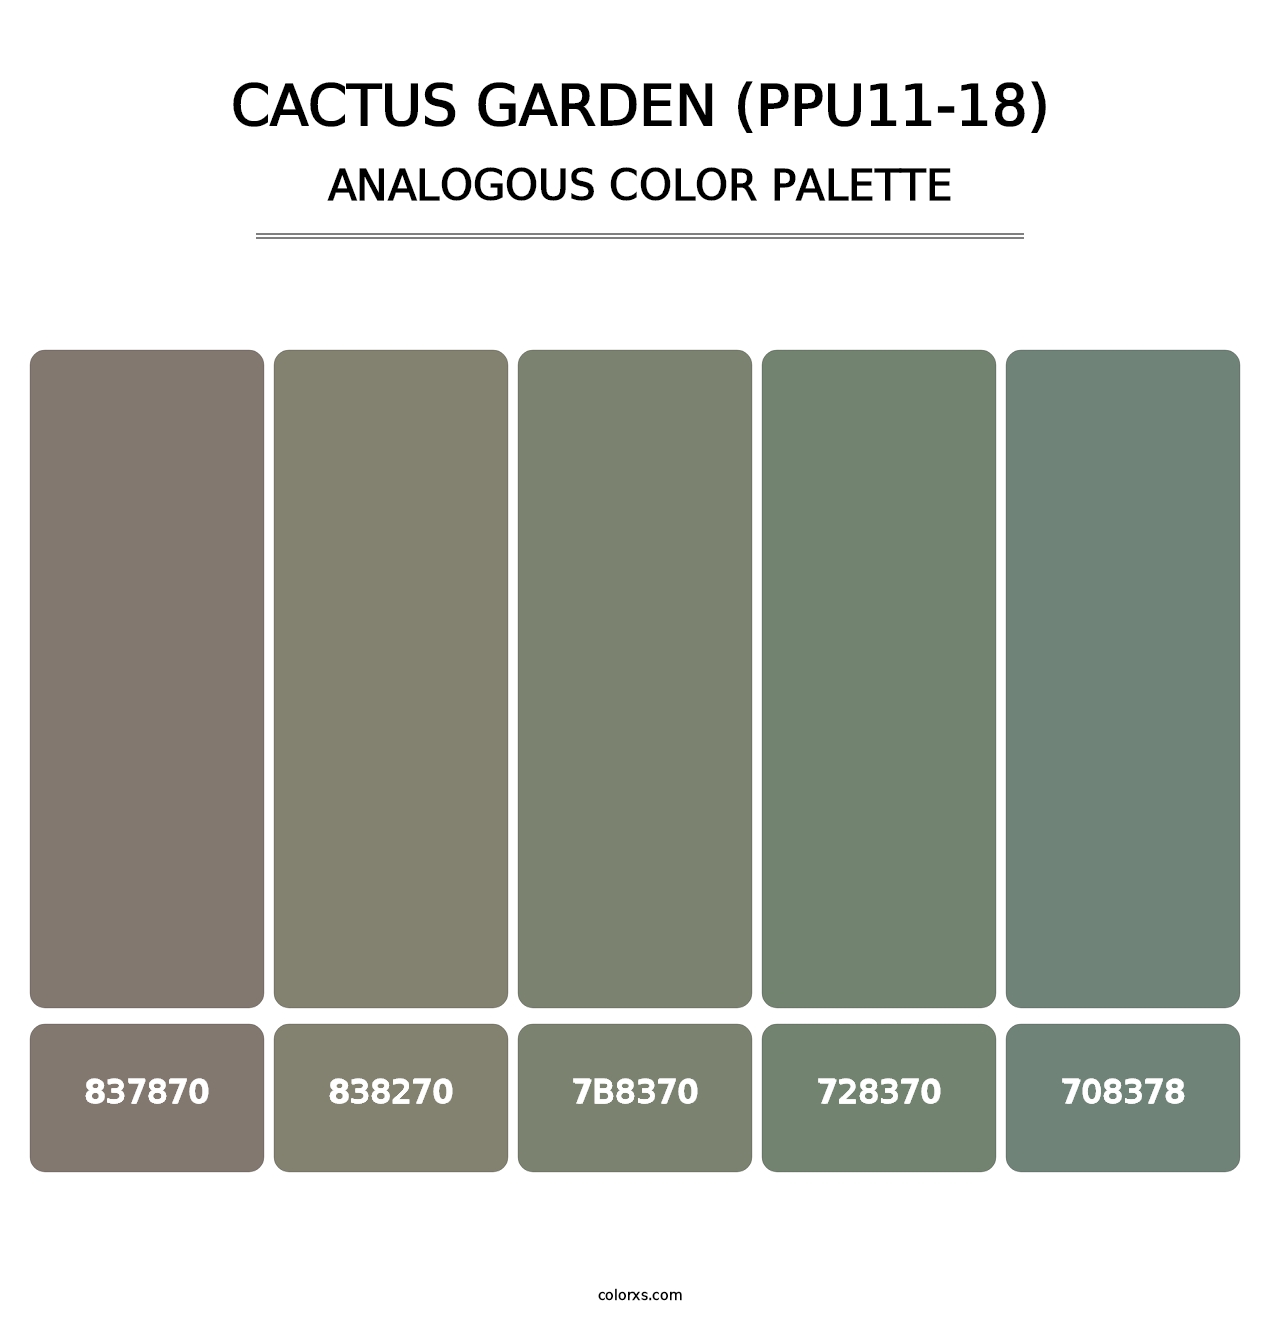 Cactus Garden (PPU11-18) - Analogous Color Palette